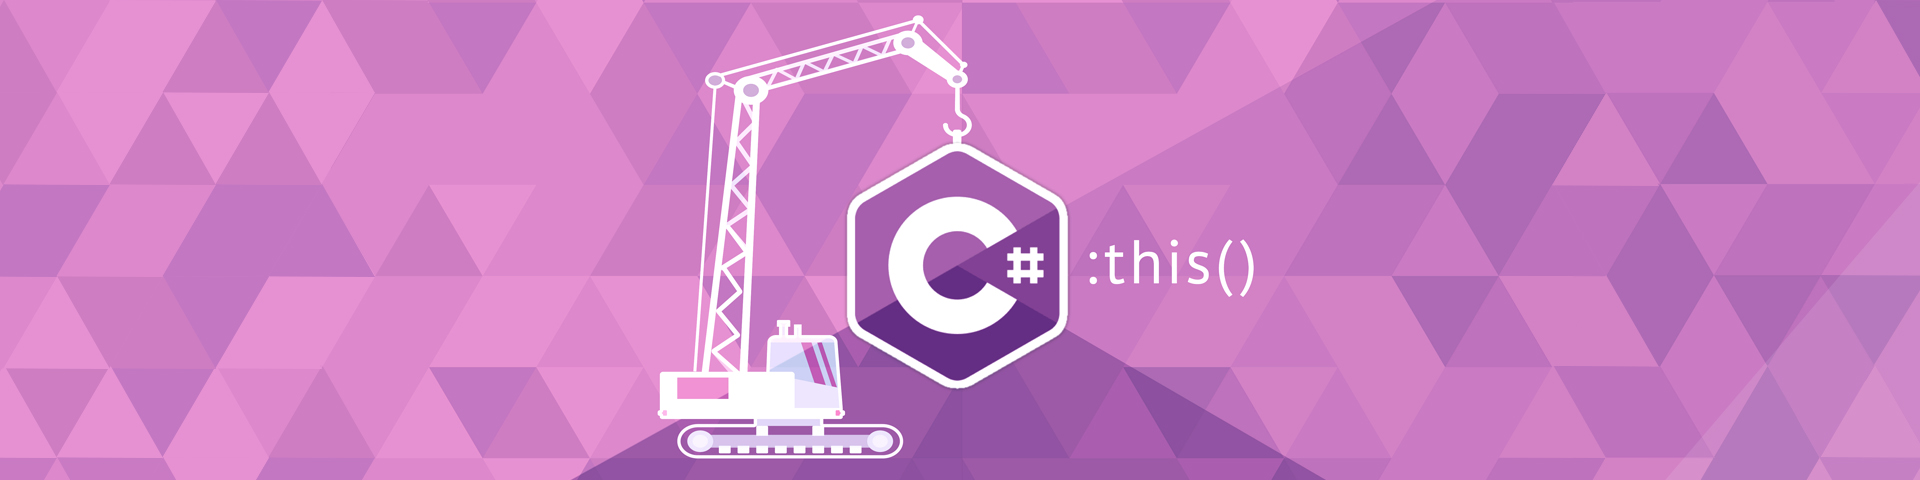 Constructor Overloading in C#